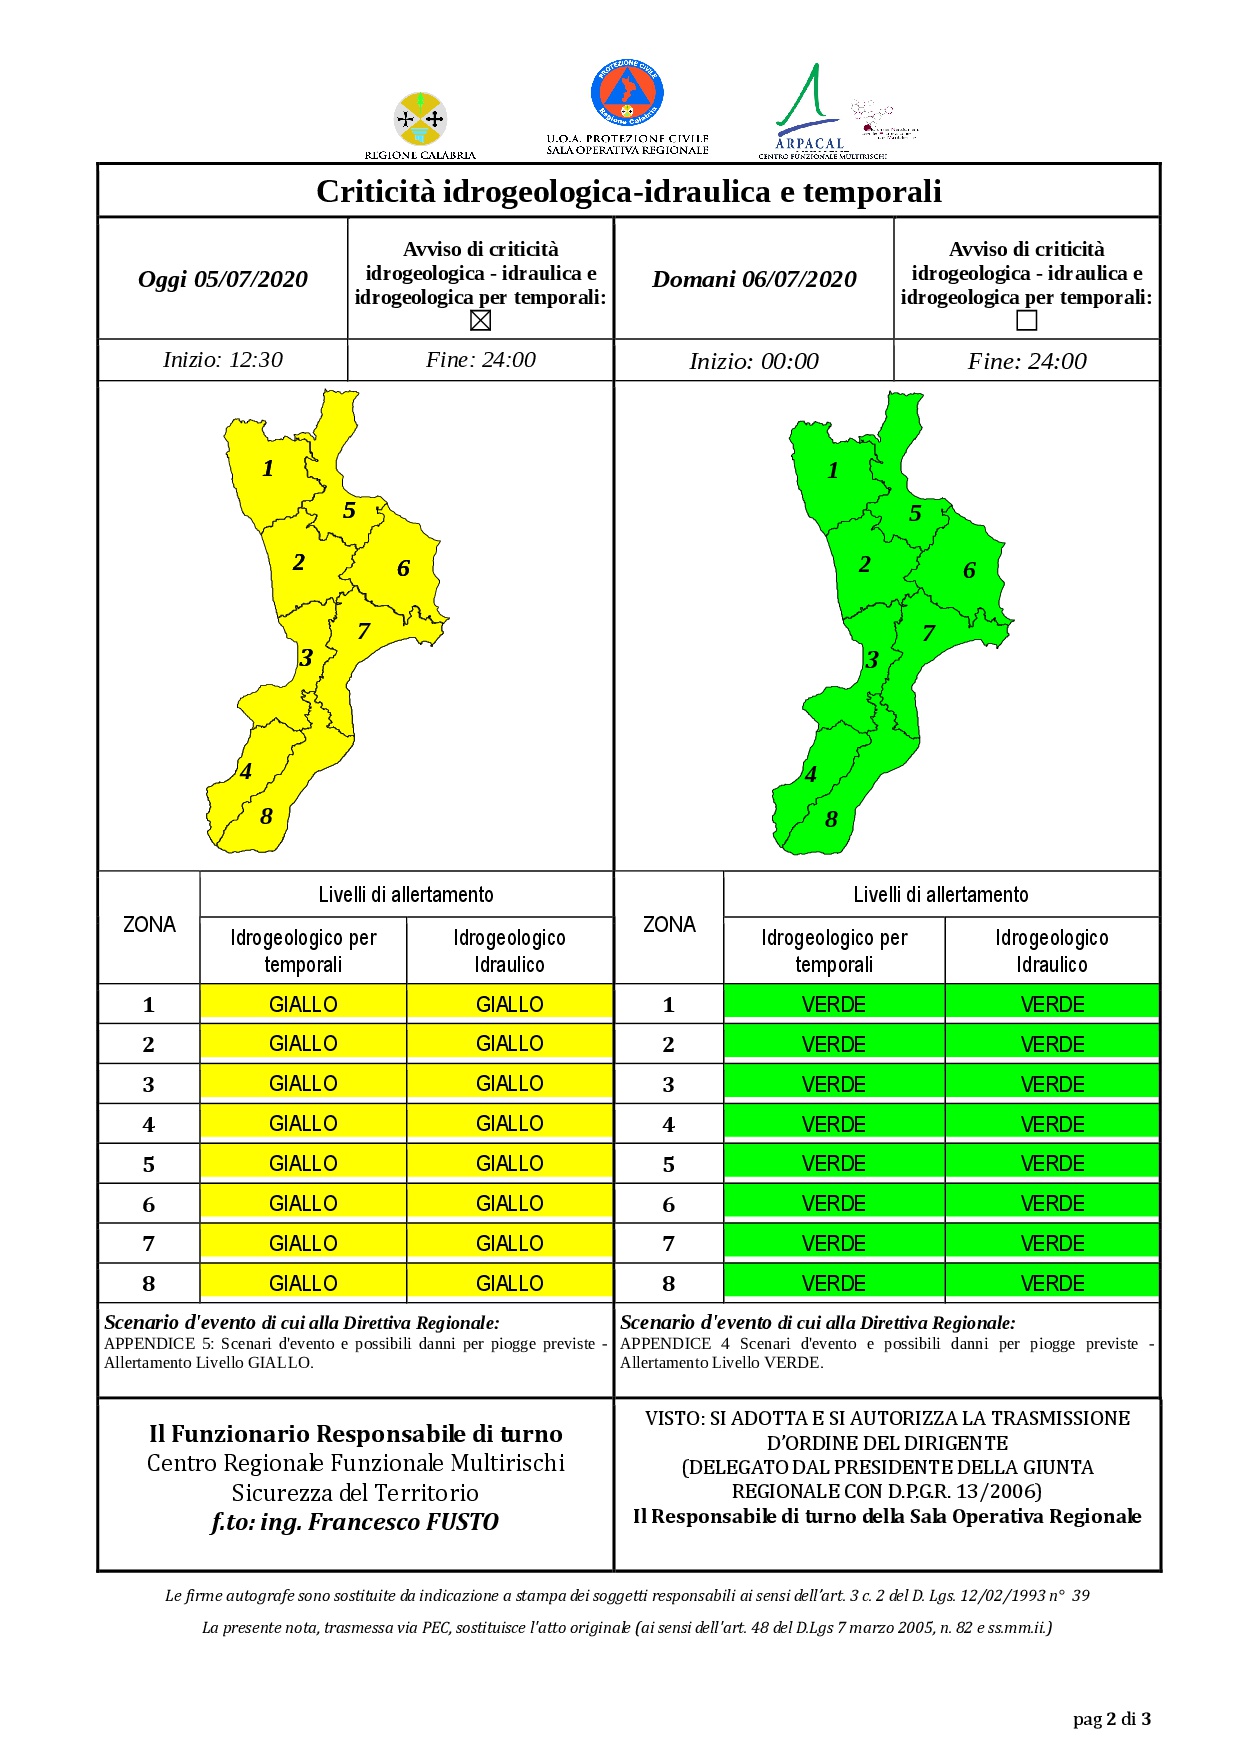 Criticità idrogeologica-idraulica e temporali in Calabria 05-07-2020